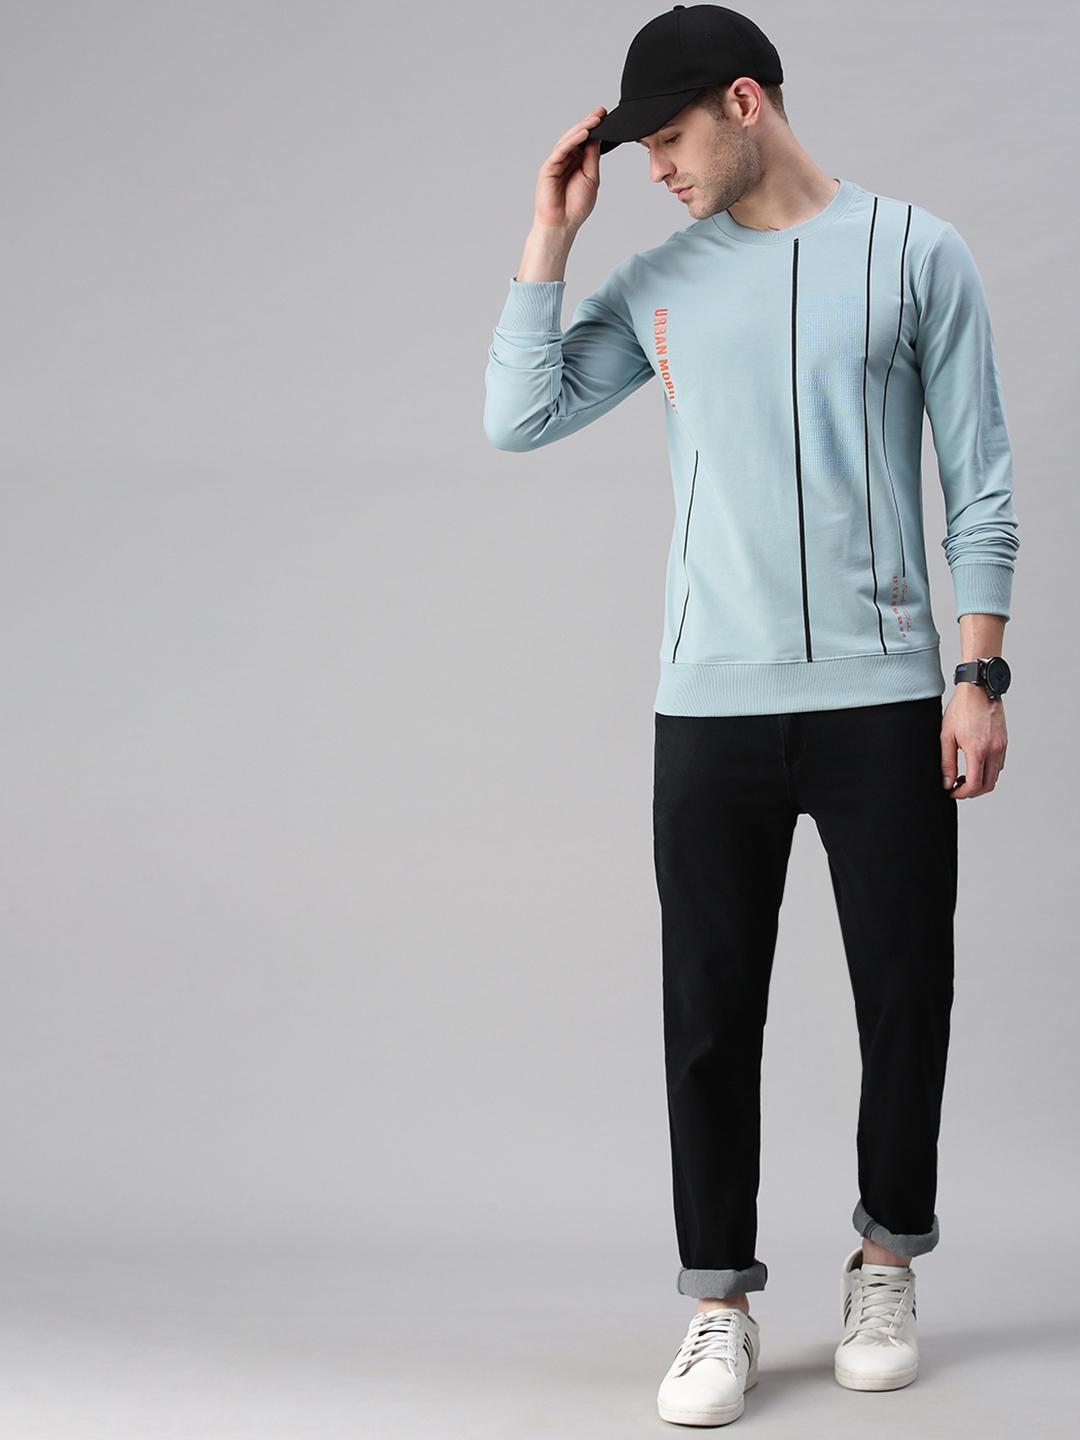 Men's Blue Cotton Blend Printed Sweatshirts